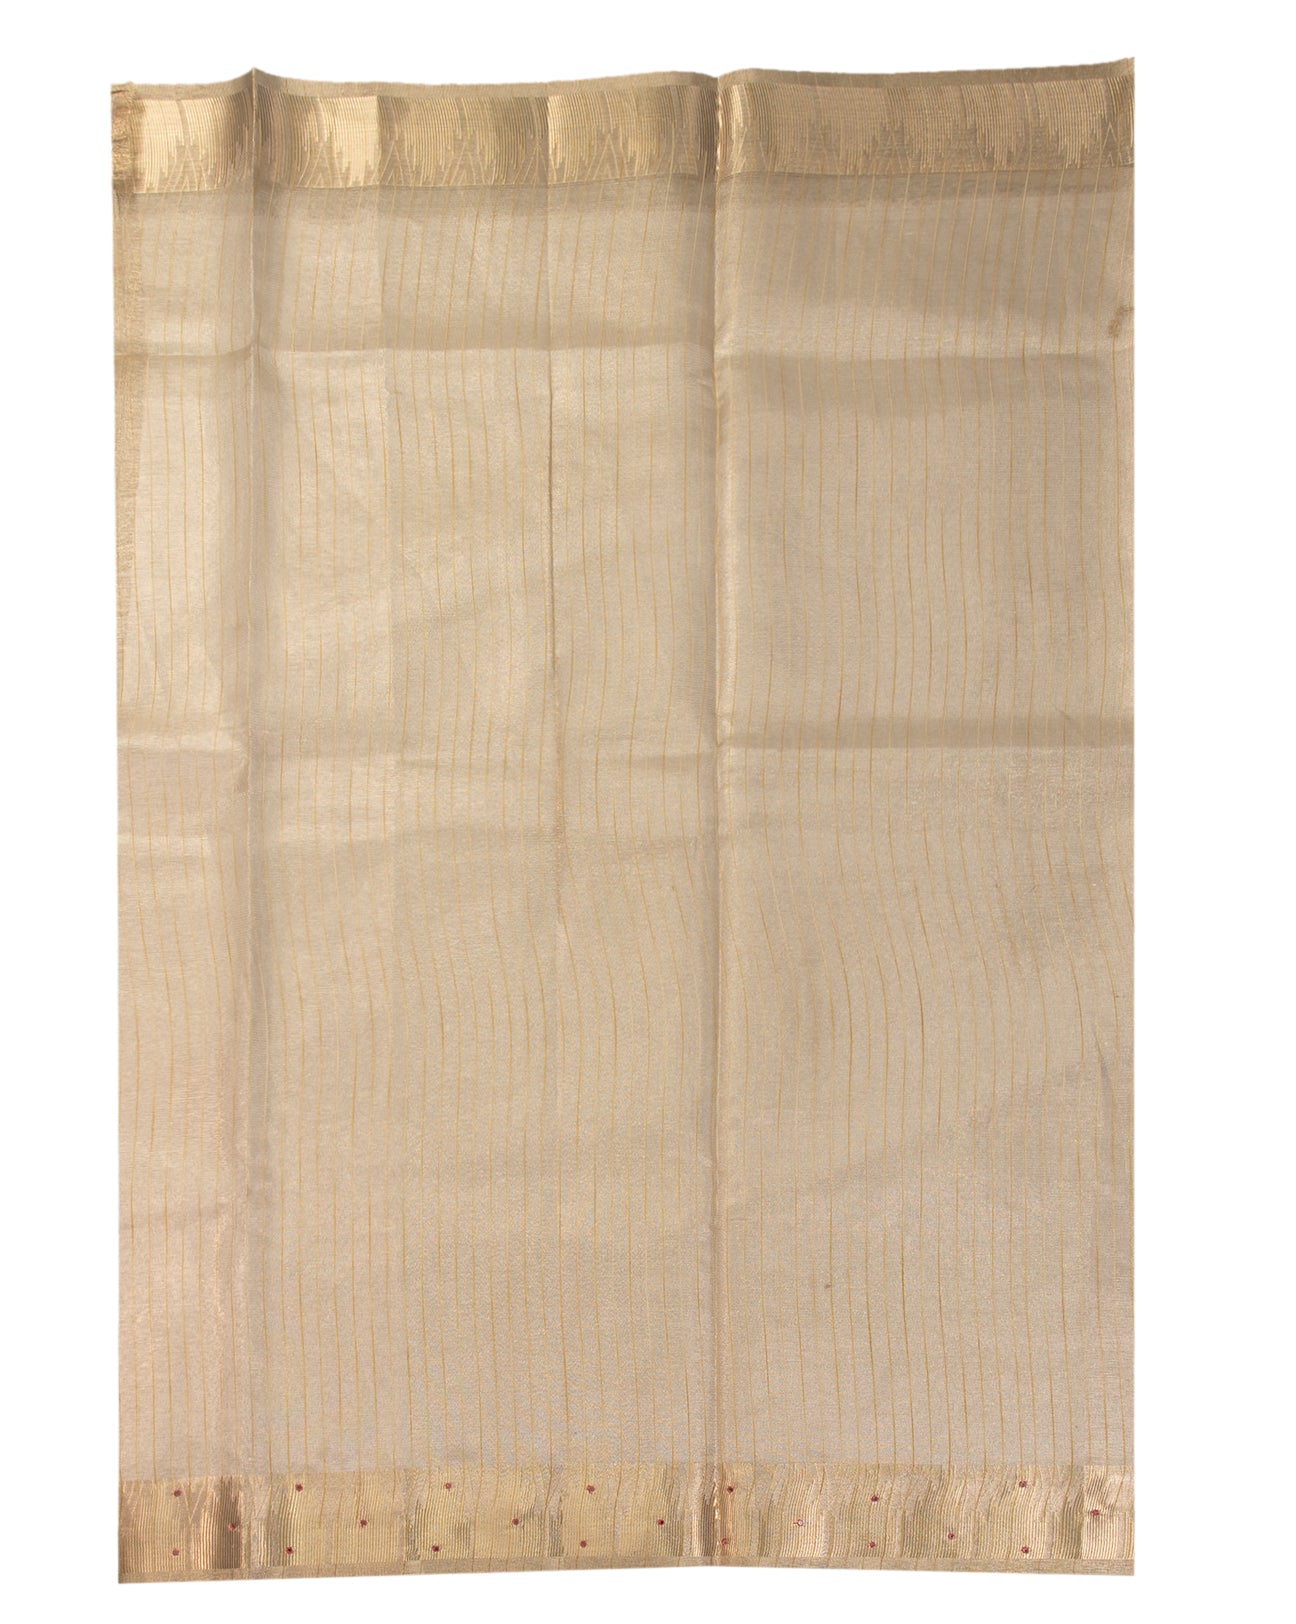 Gold net Cotton Saree - swayamvara silks